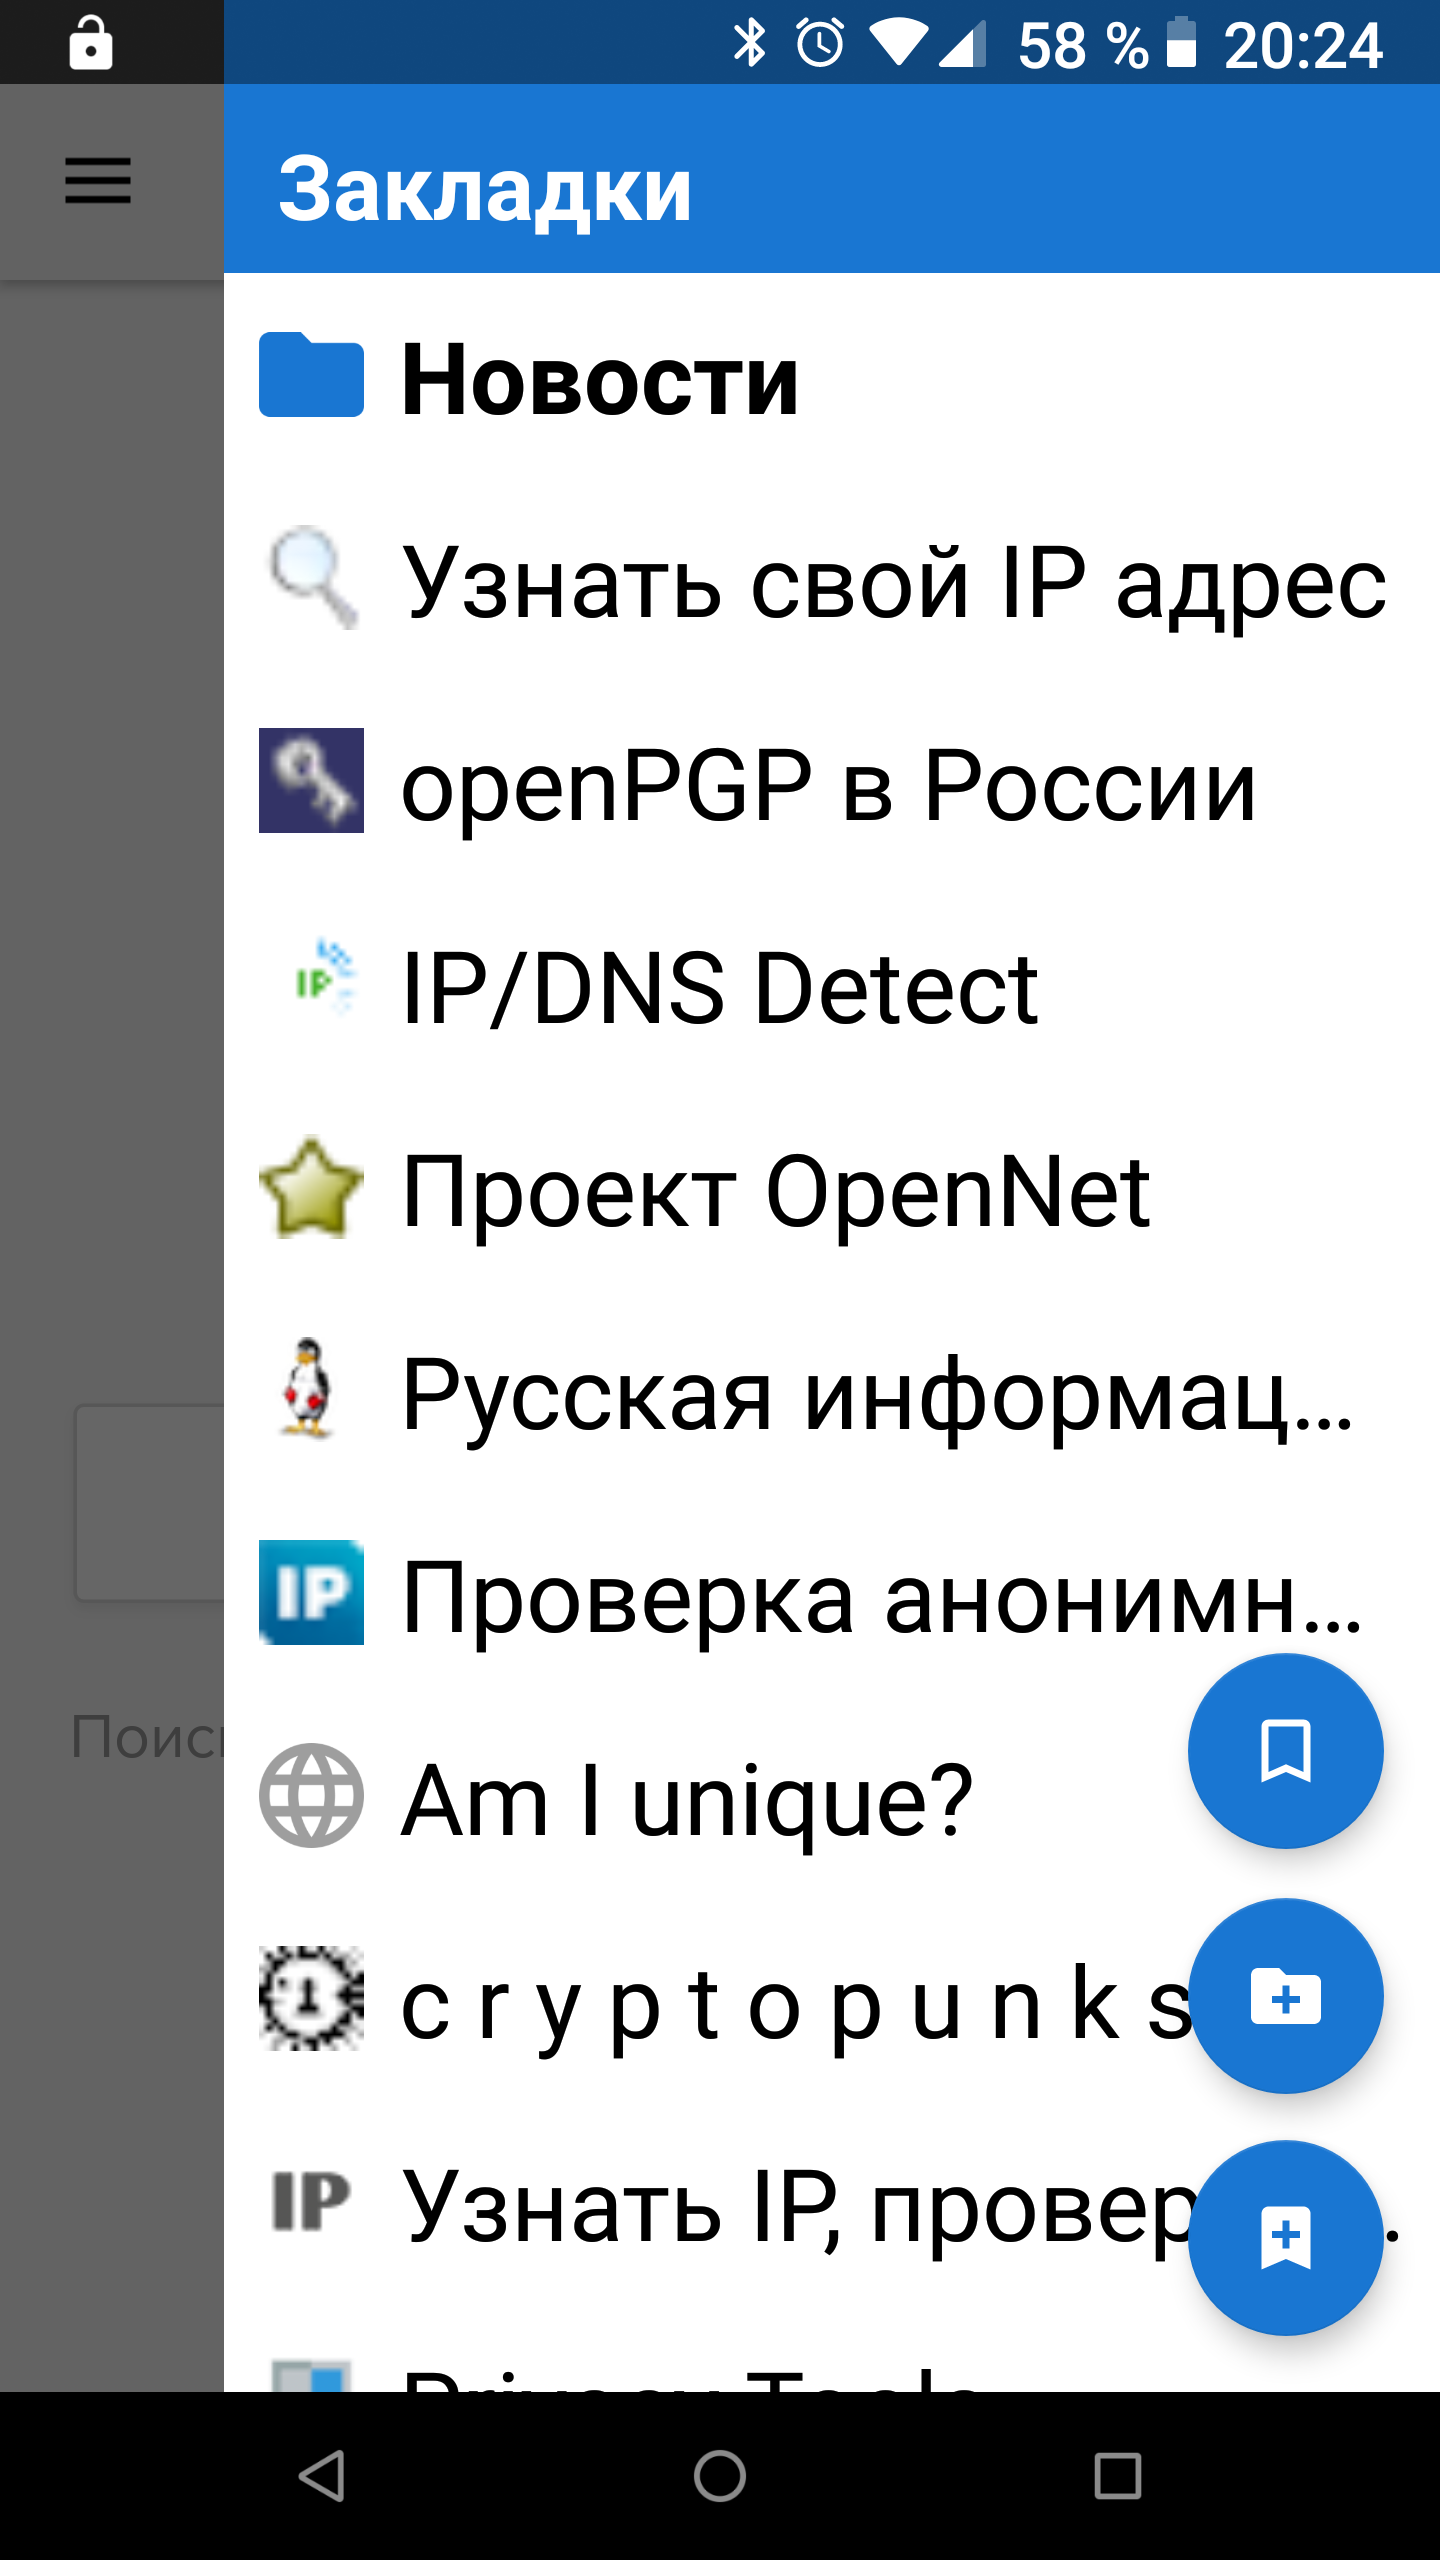 fastlane/metadata/android/ru/images/phoneScreenshots/06-Bookmarks.png